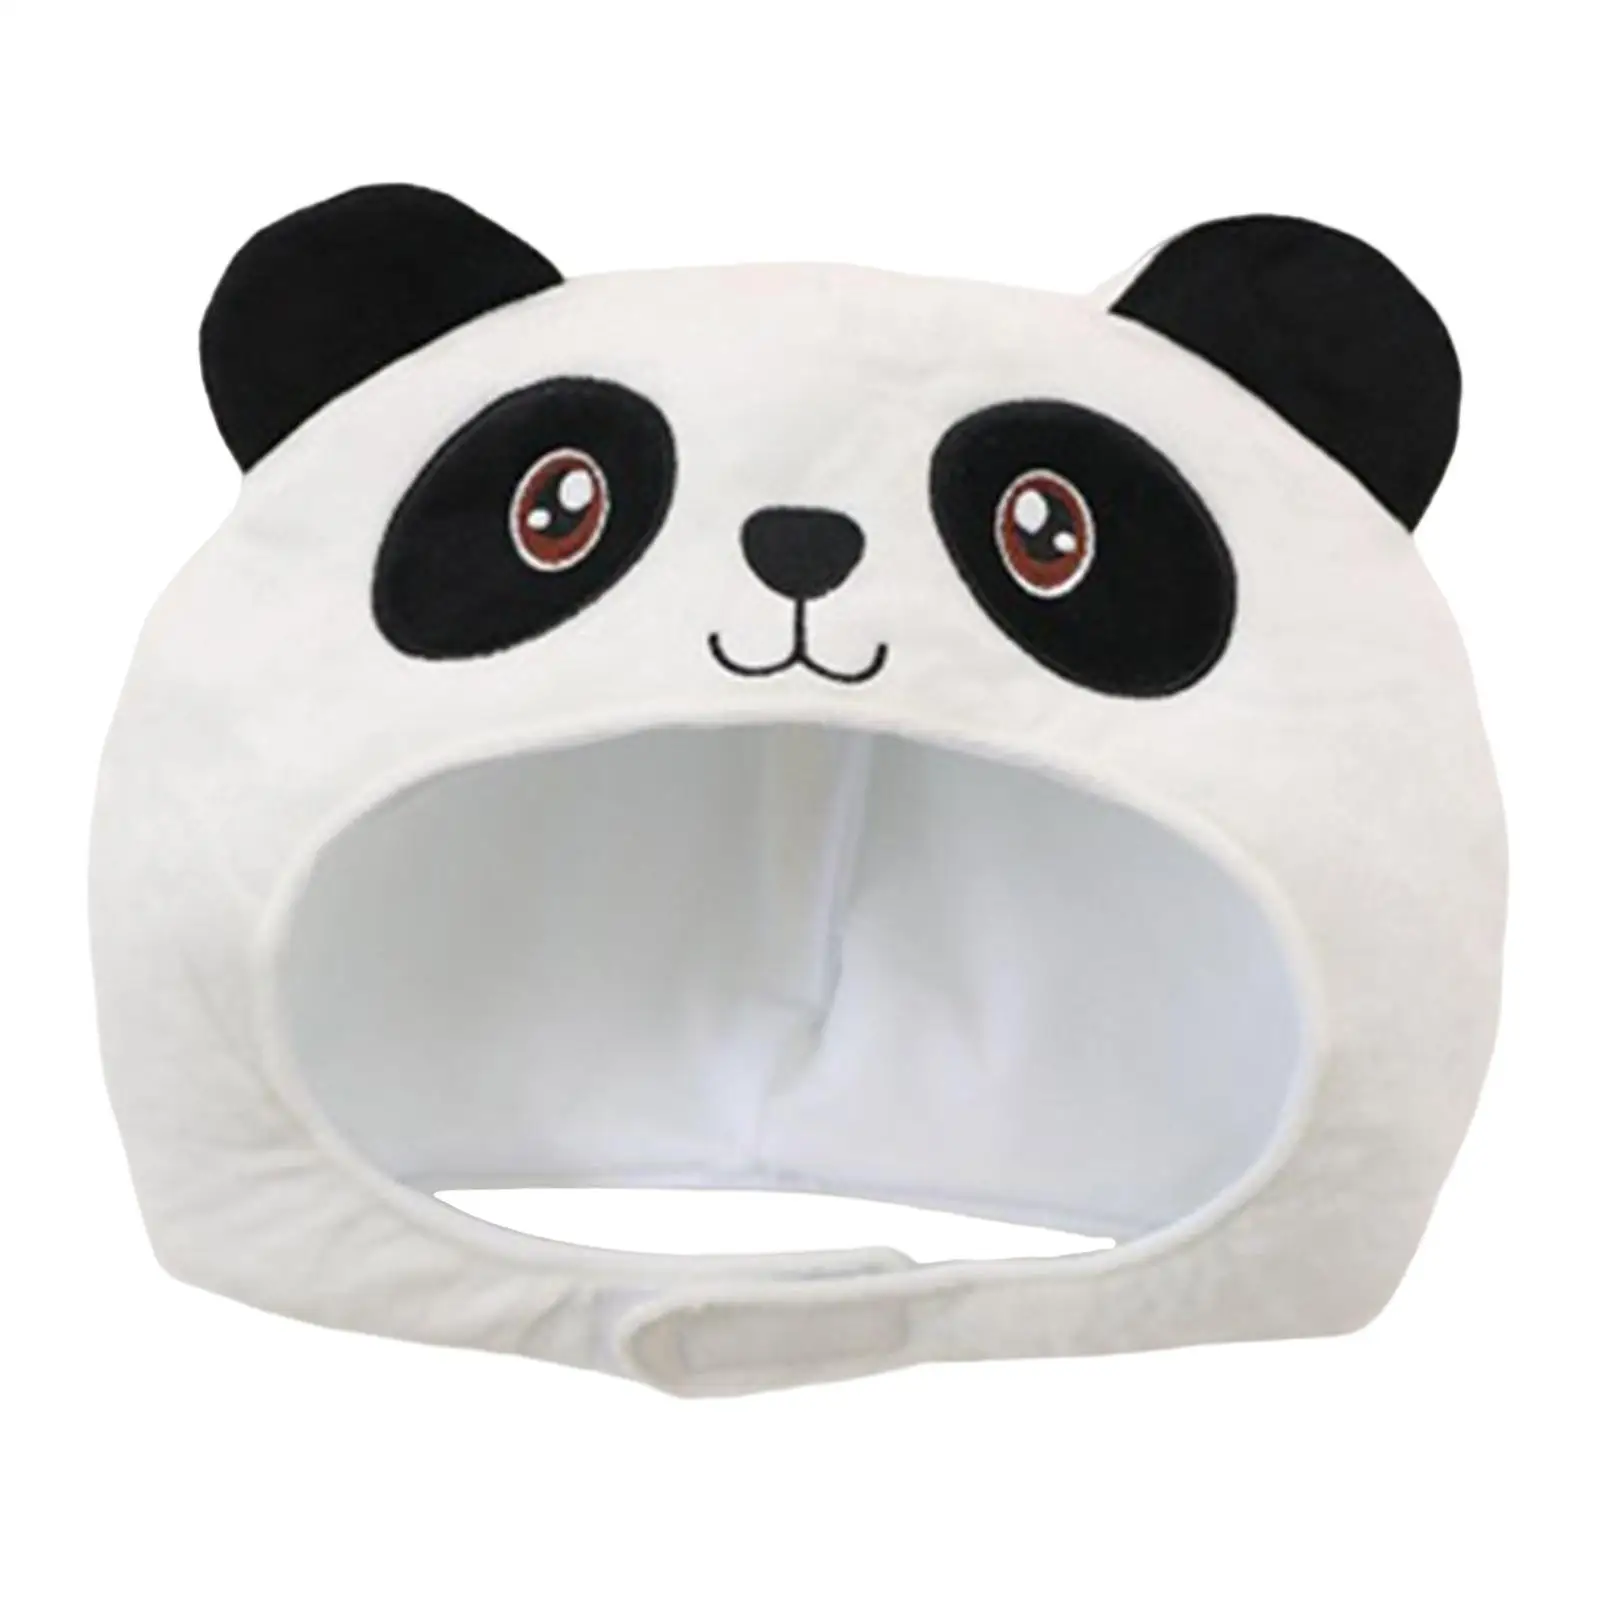 Cute Plush Panda Hat Funny Novelty Winter Ski Headgear Hood Cap for Photo Props Halloween Dress up Party Costume